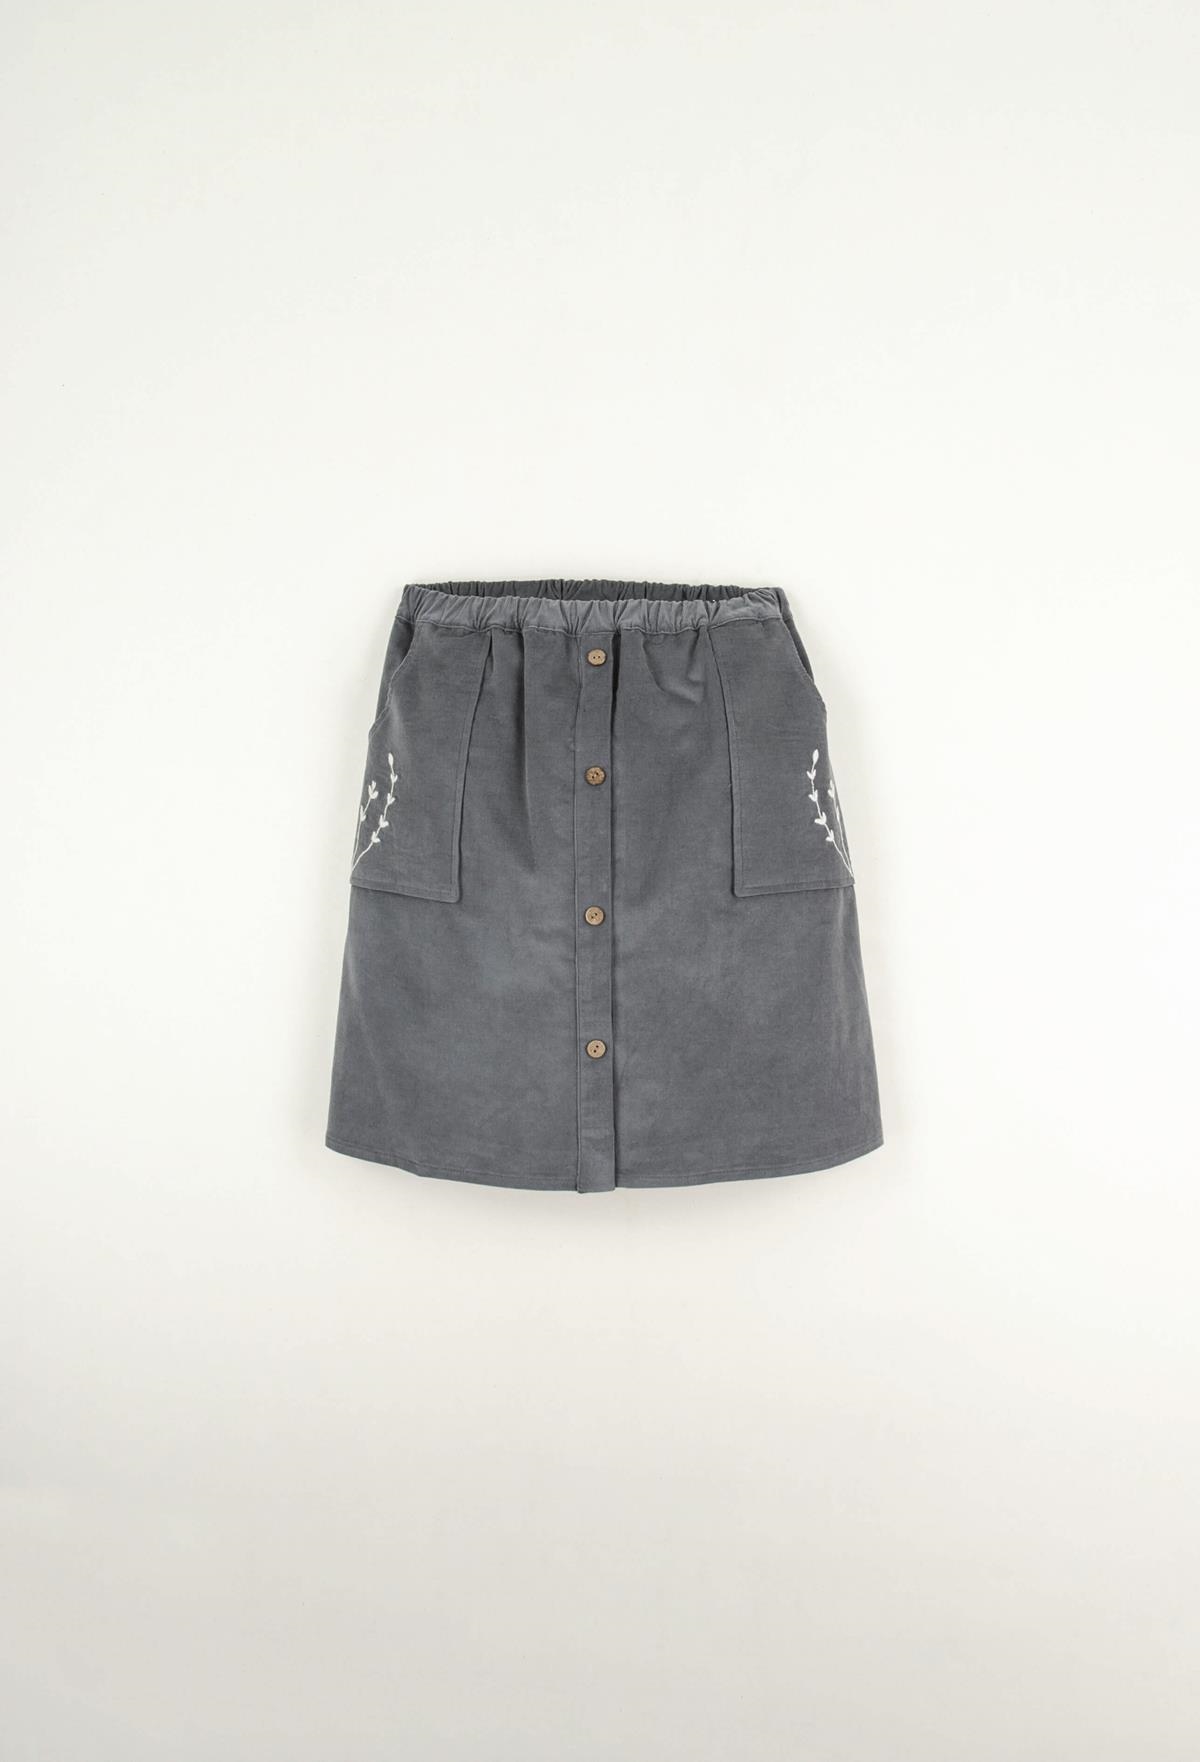 Mod.19.2 Grey skirt with embroidered pocket | AW22.23 Mod.19.2 Grey skirt with embroidered pocket